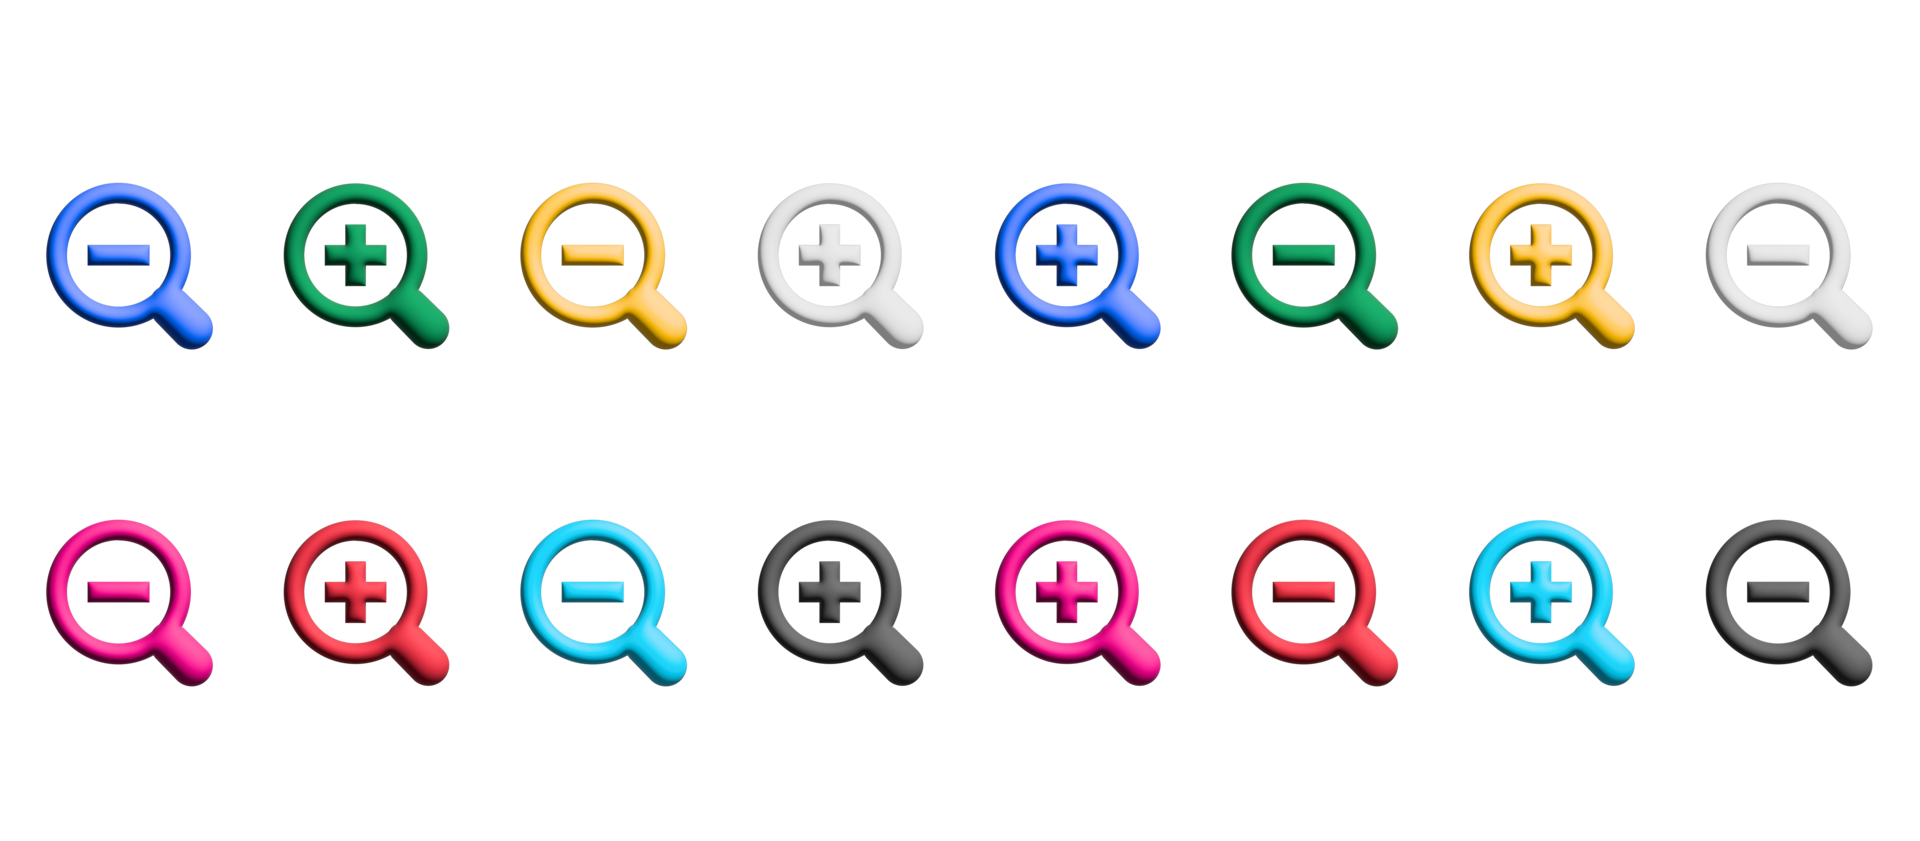 jeu d'icônes de zoom, éléments graphiques de symboles colorés png